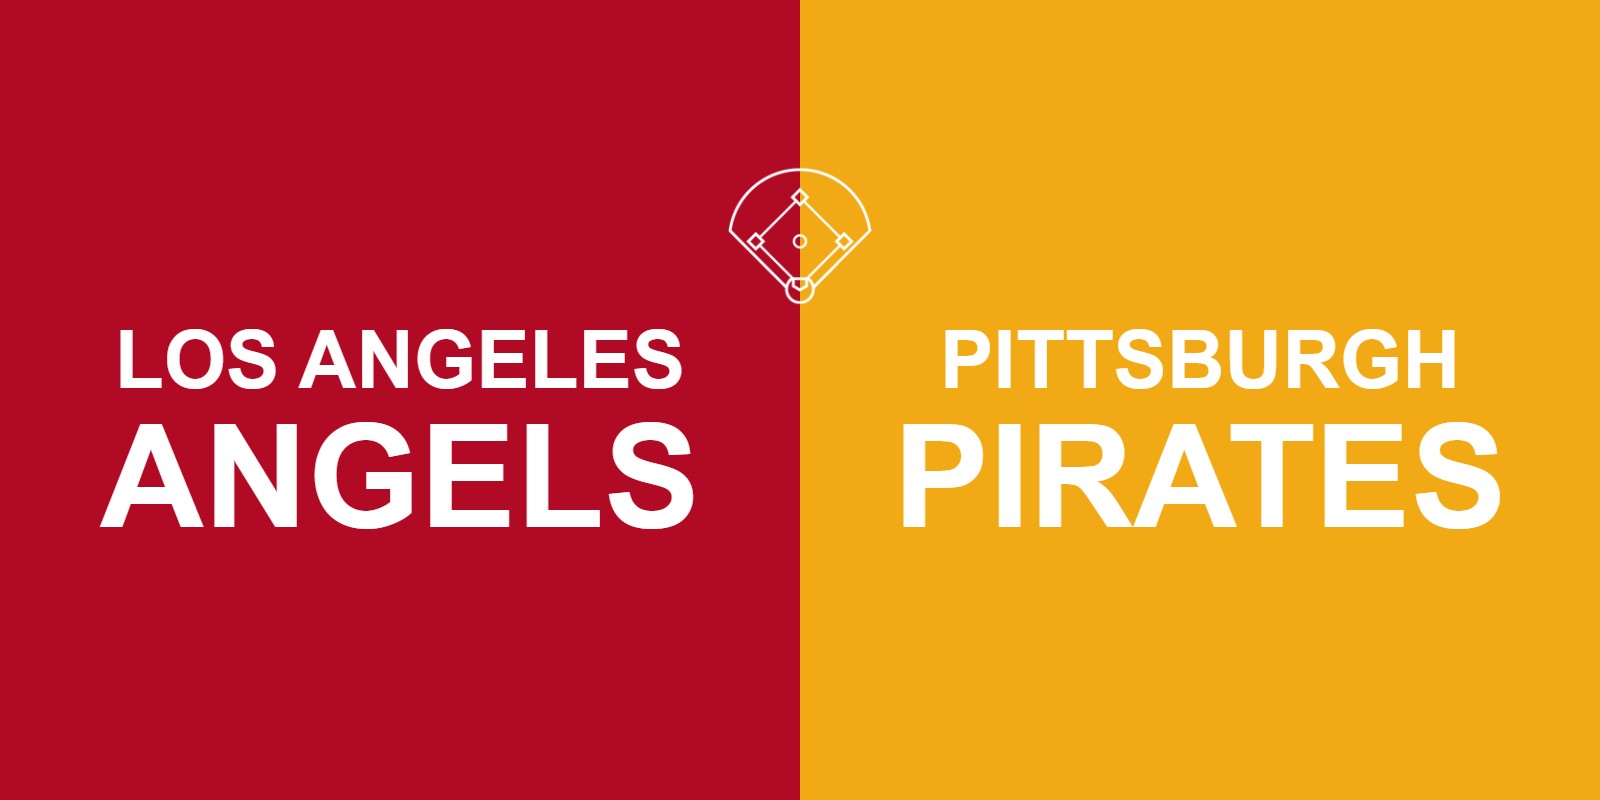 Angels vs Pirates Tickets